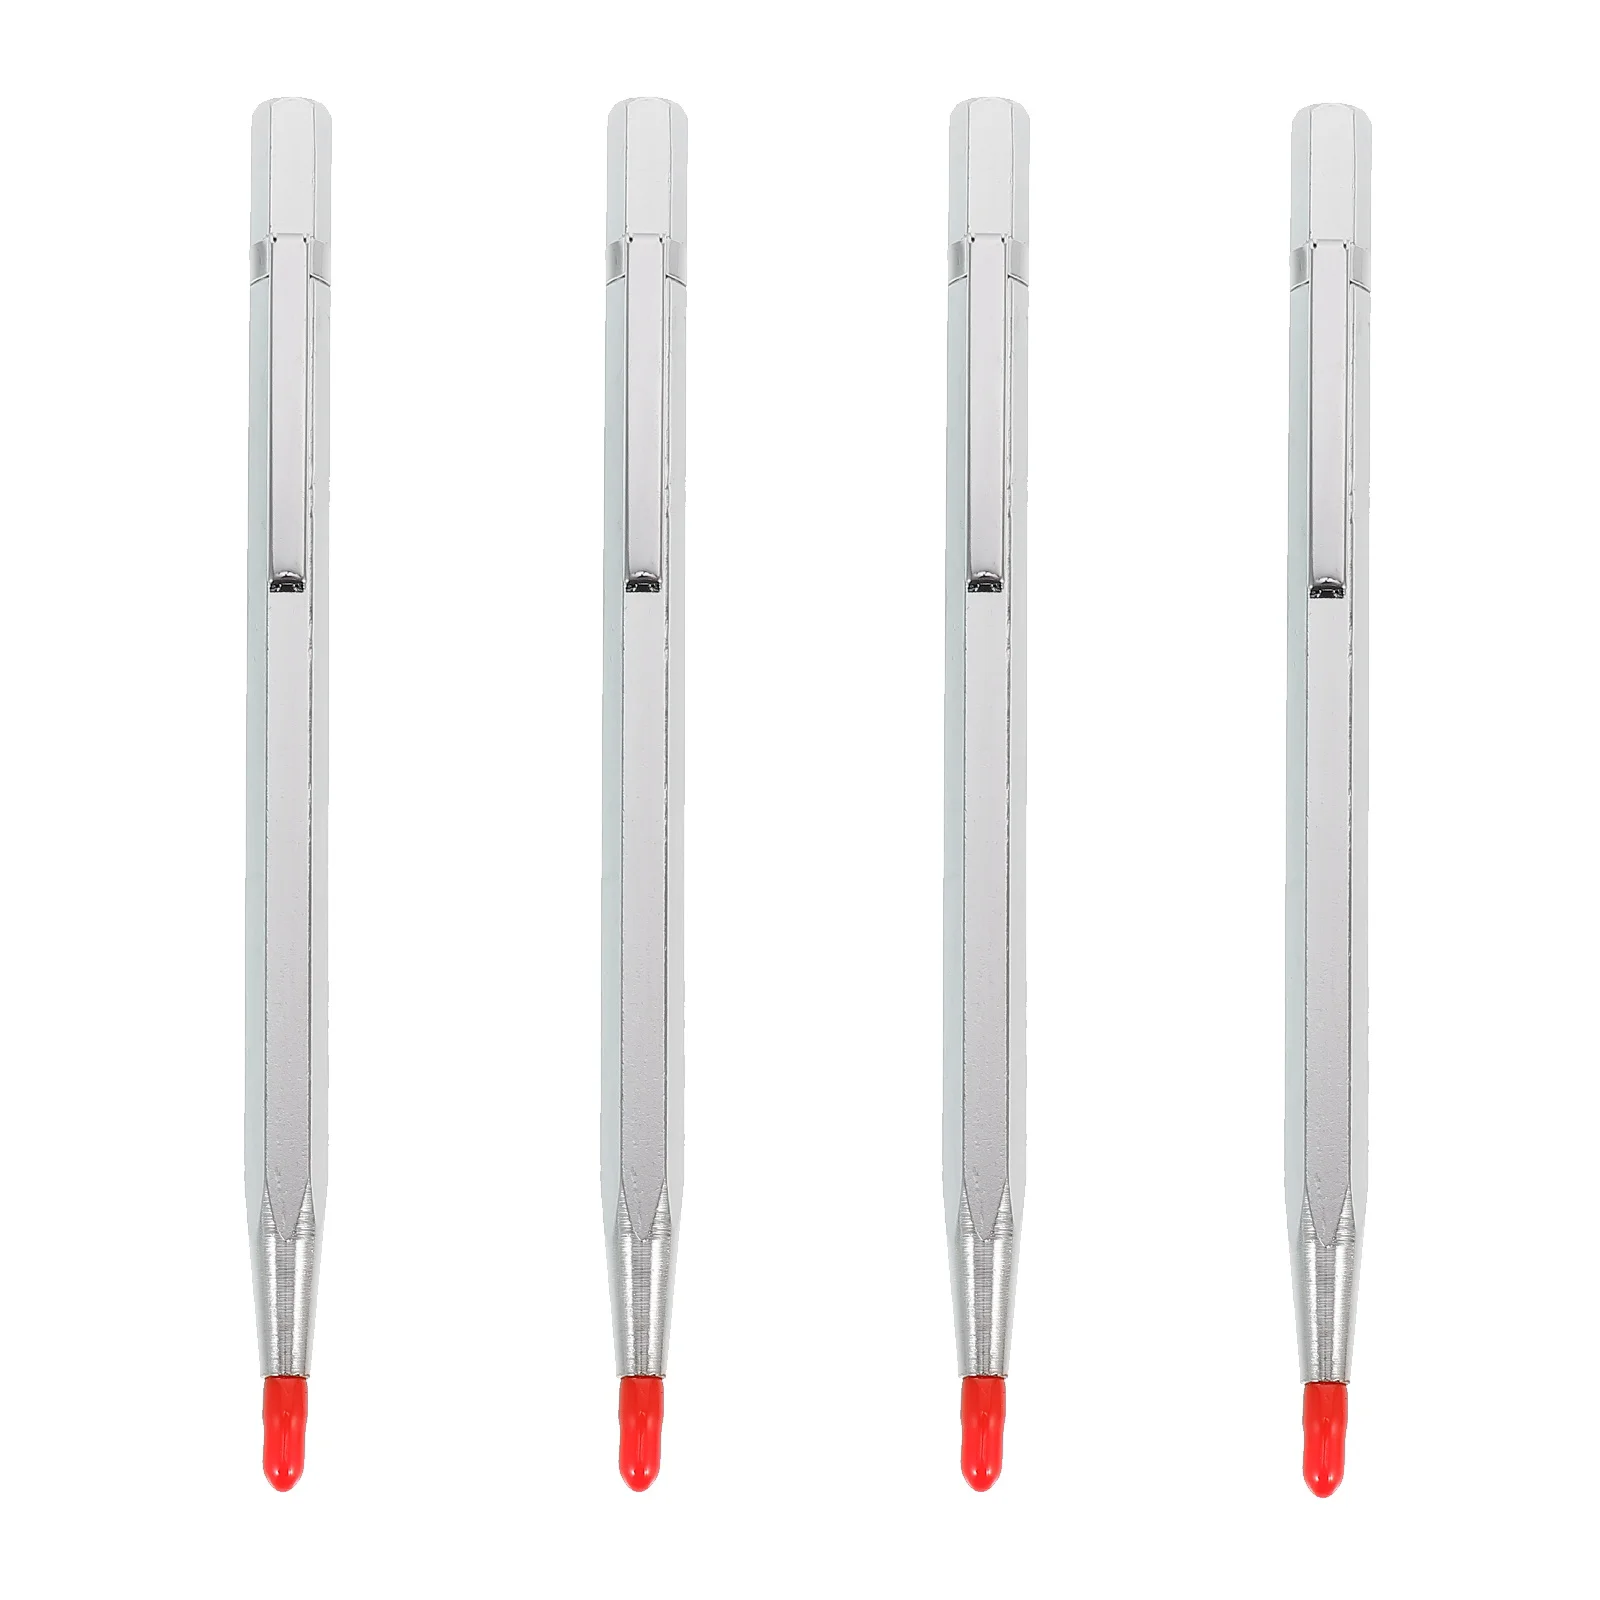 

4 Carving Pen Engraving Marking Pen Scribing Pen Tungsten Carbide Engraving Pen for Glass Ceramics Metal Sheet ( Sliver )